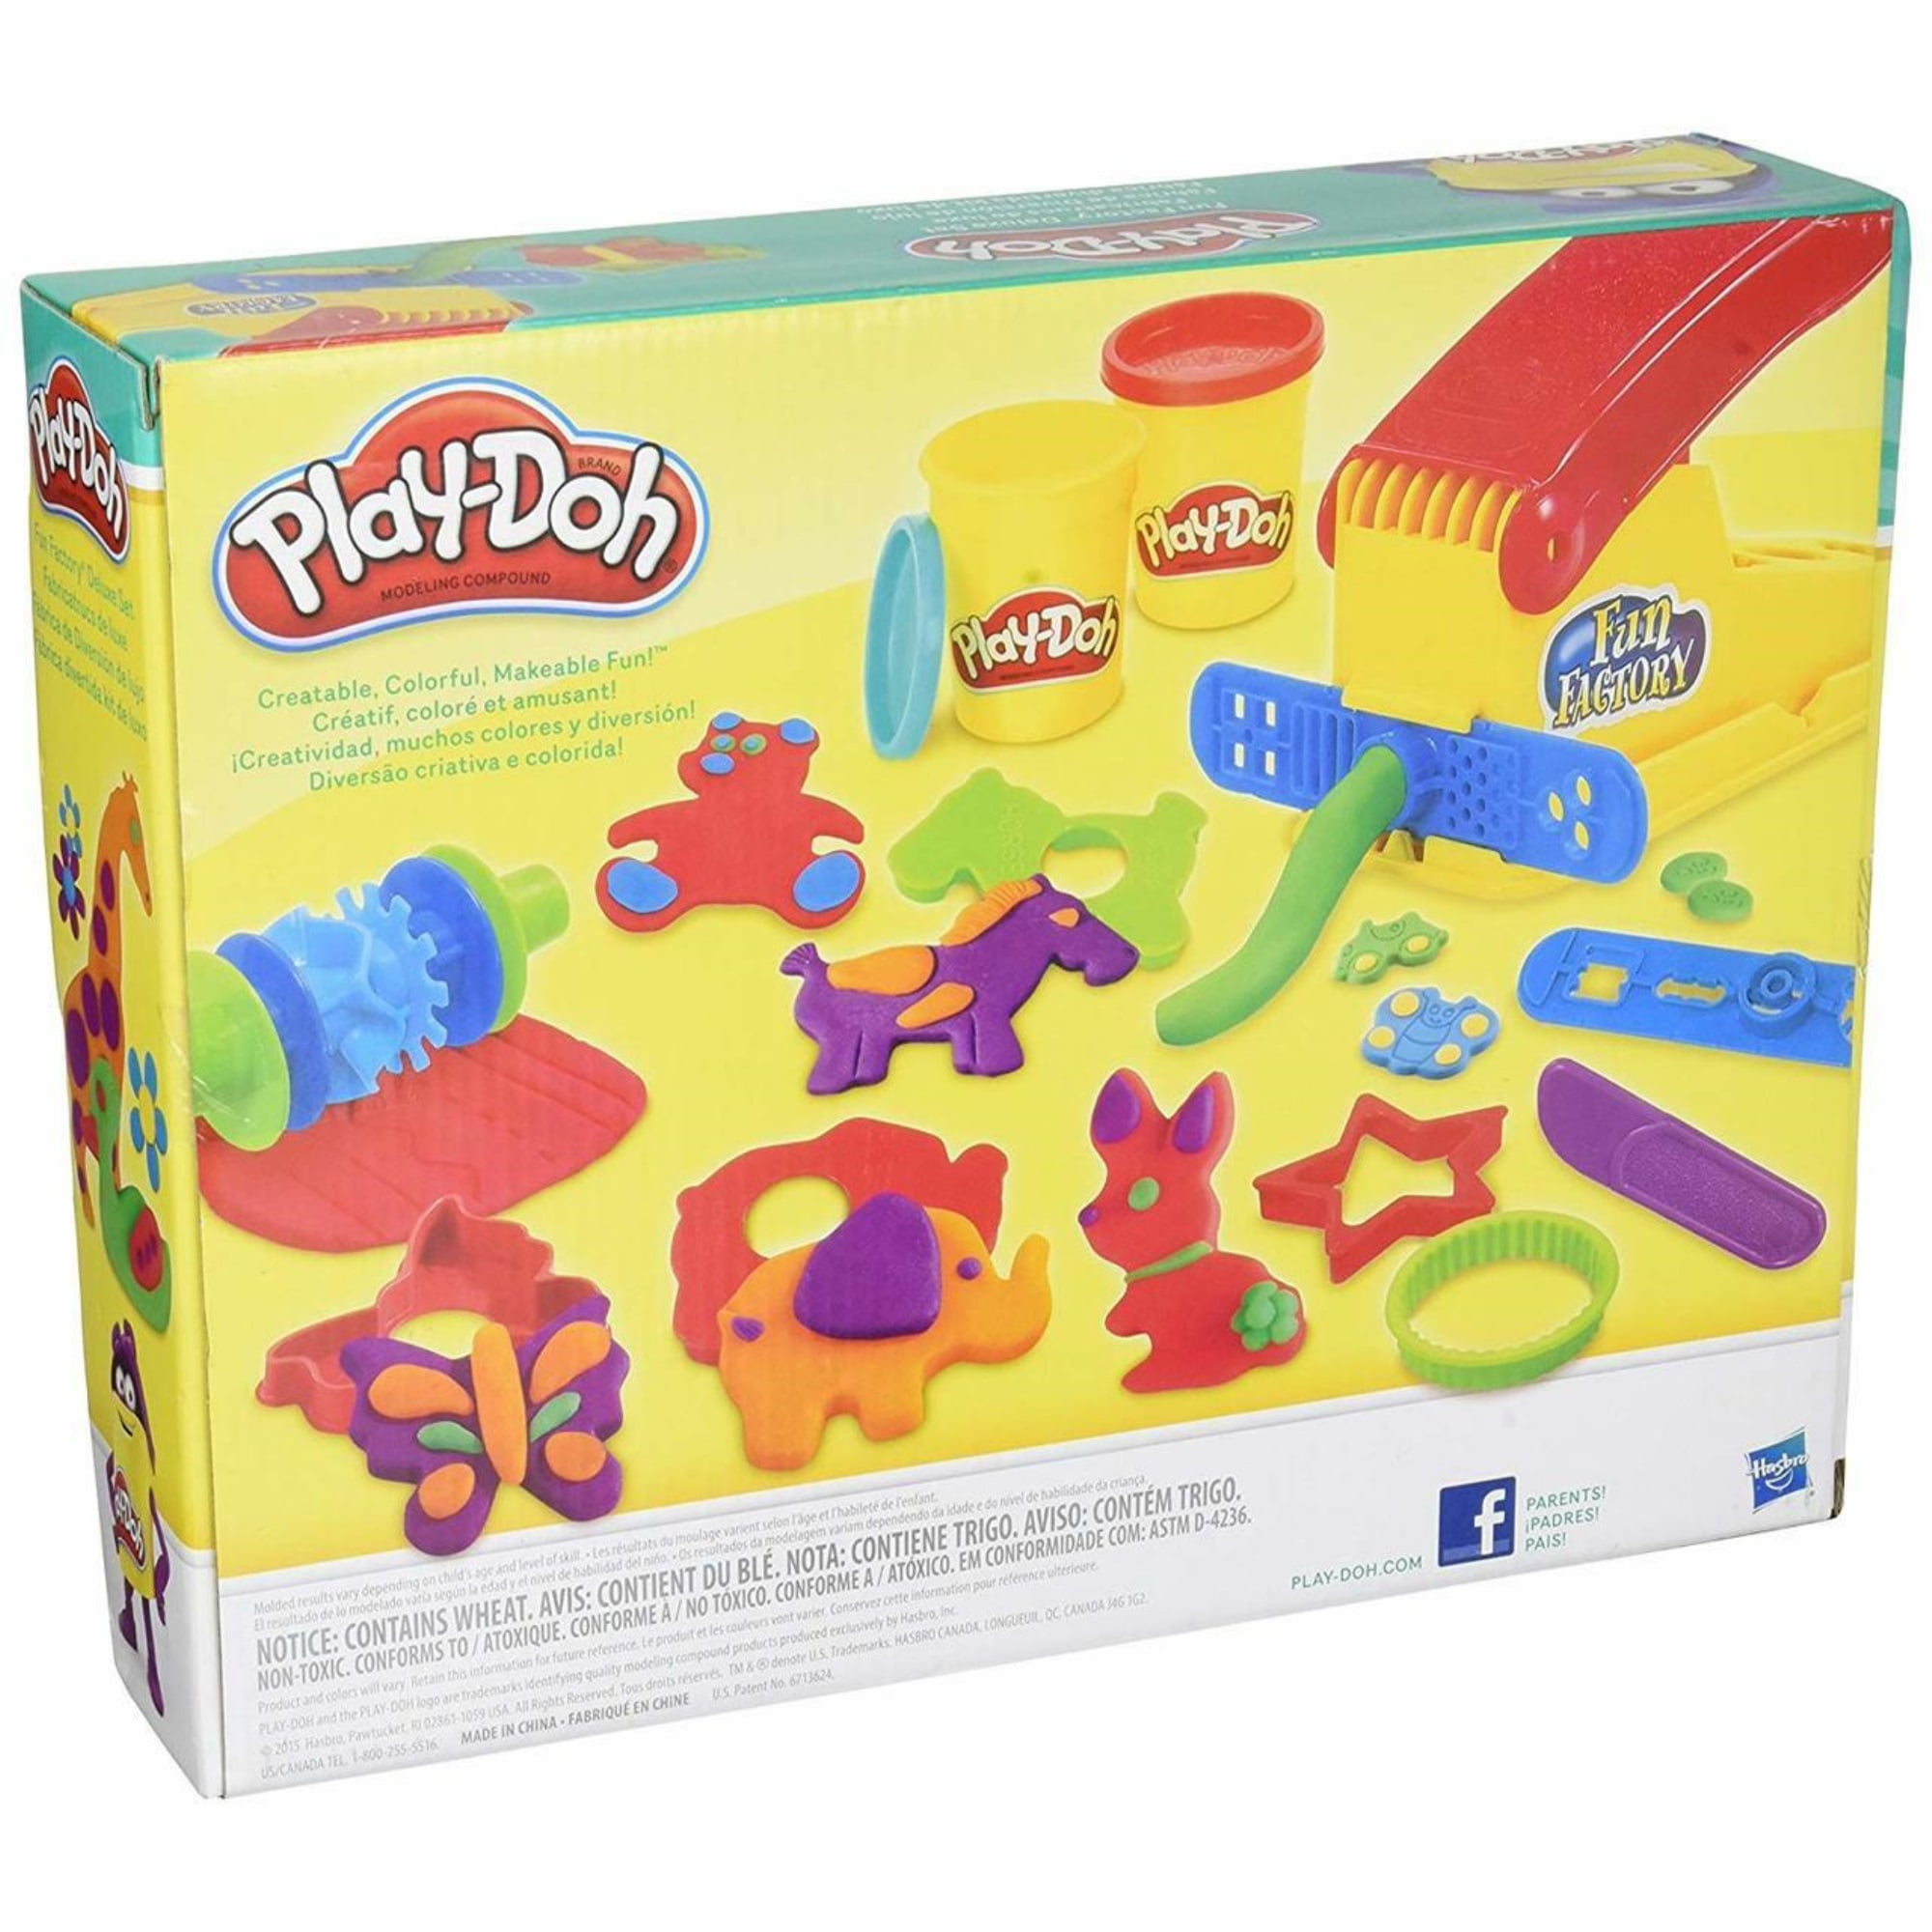 Hasbro Play-Doh B6766 Super Fun Factory Deluxe Knetpresse Set Kinder Knete 672g 